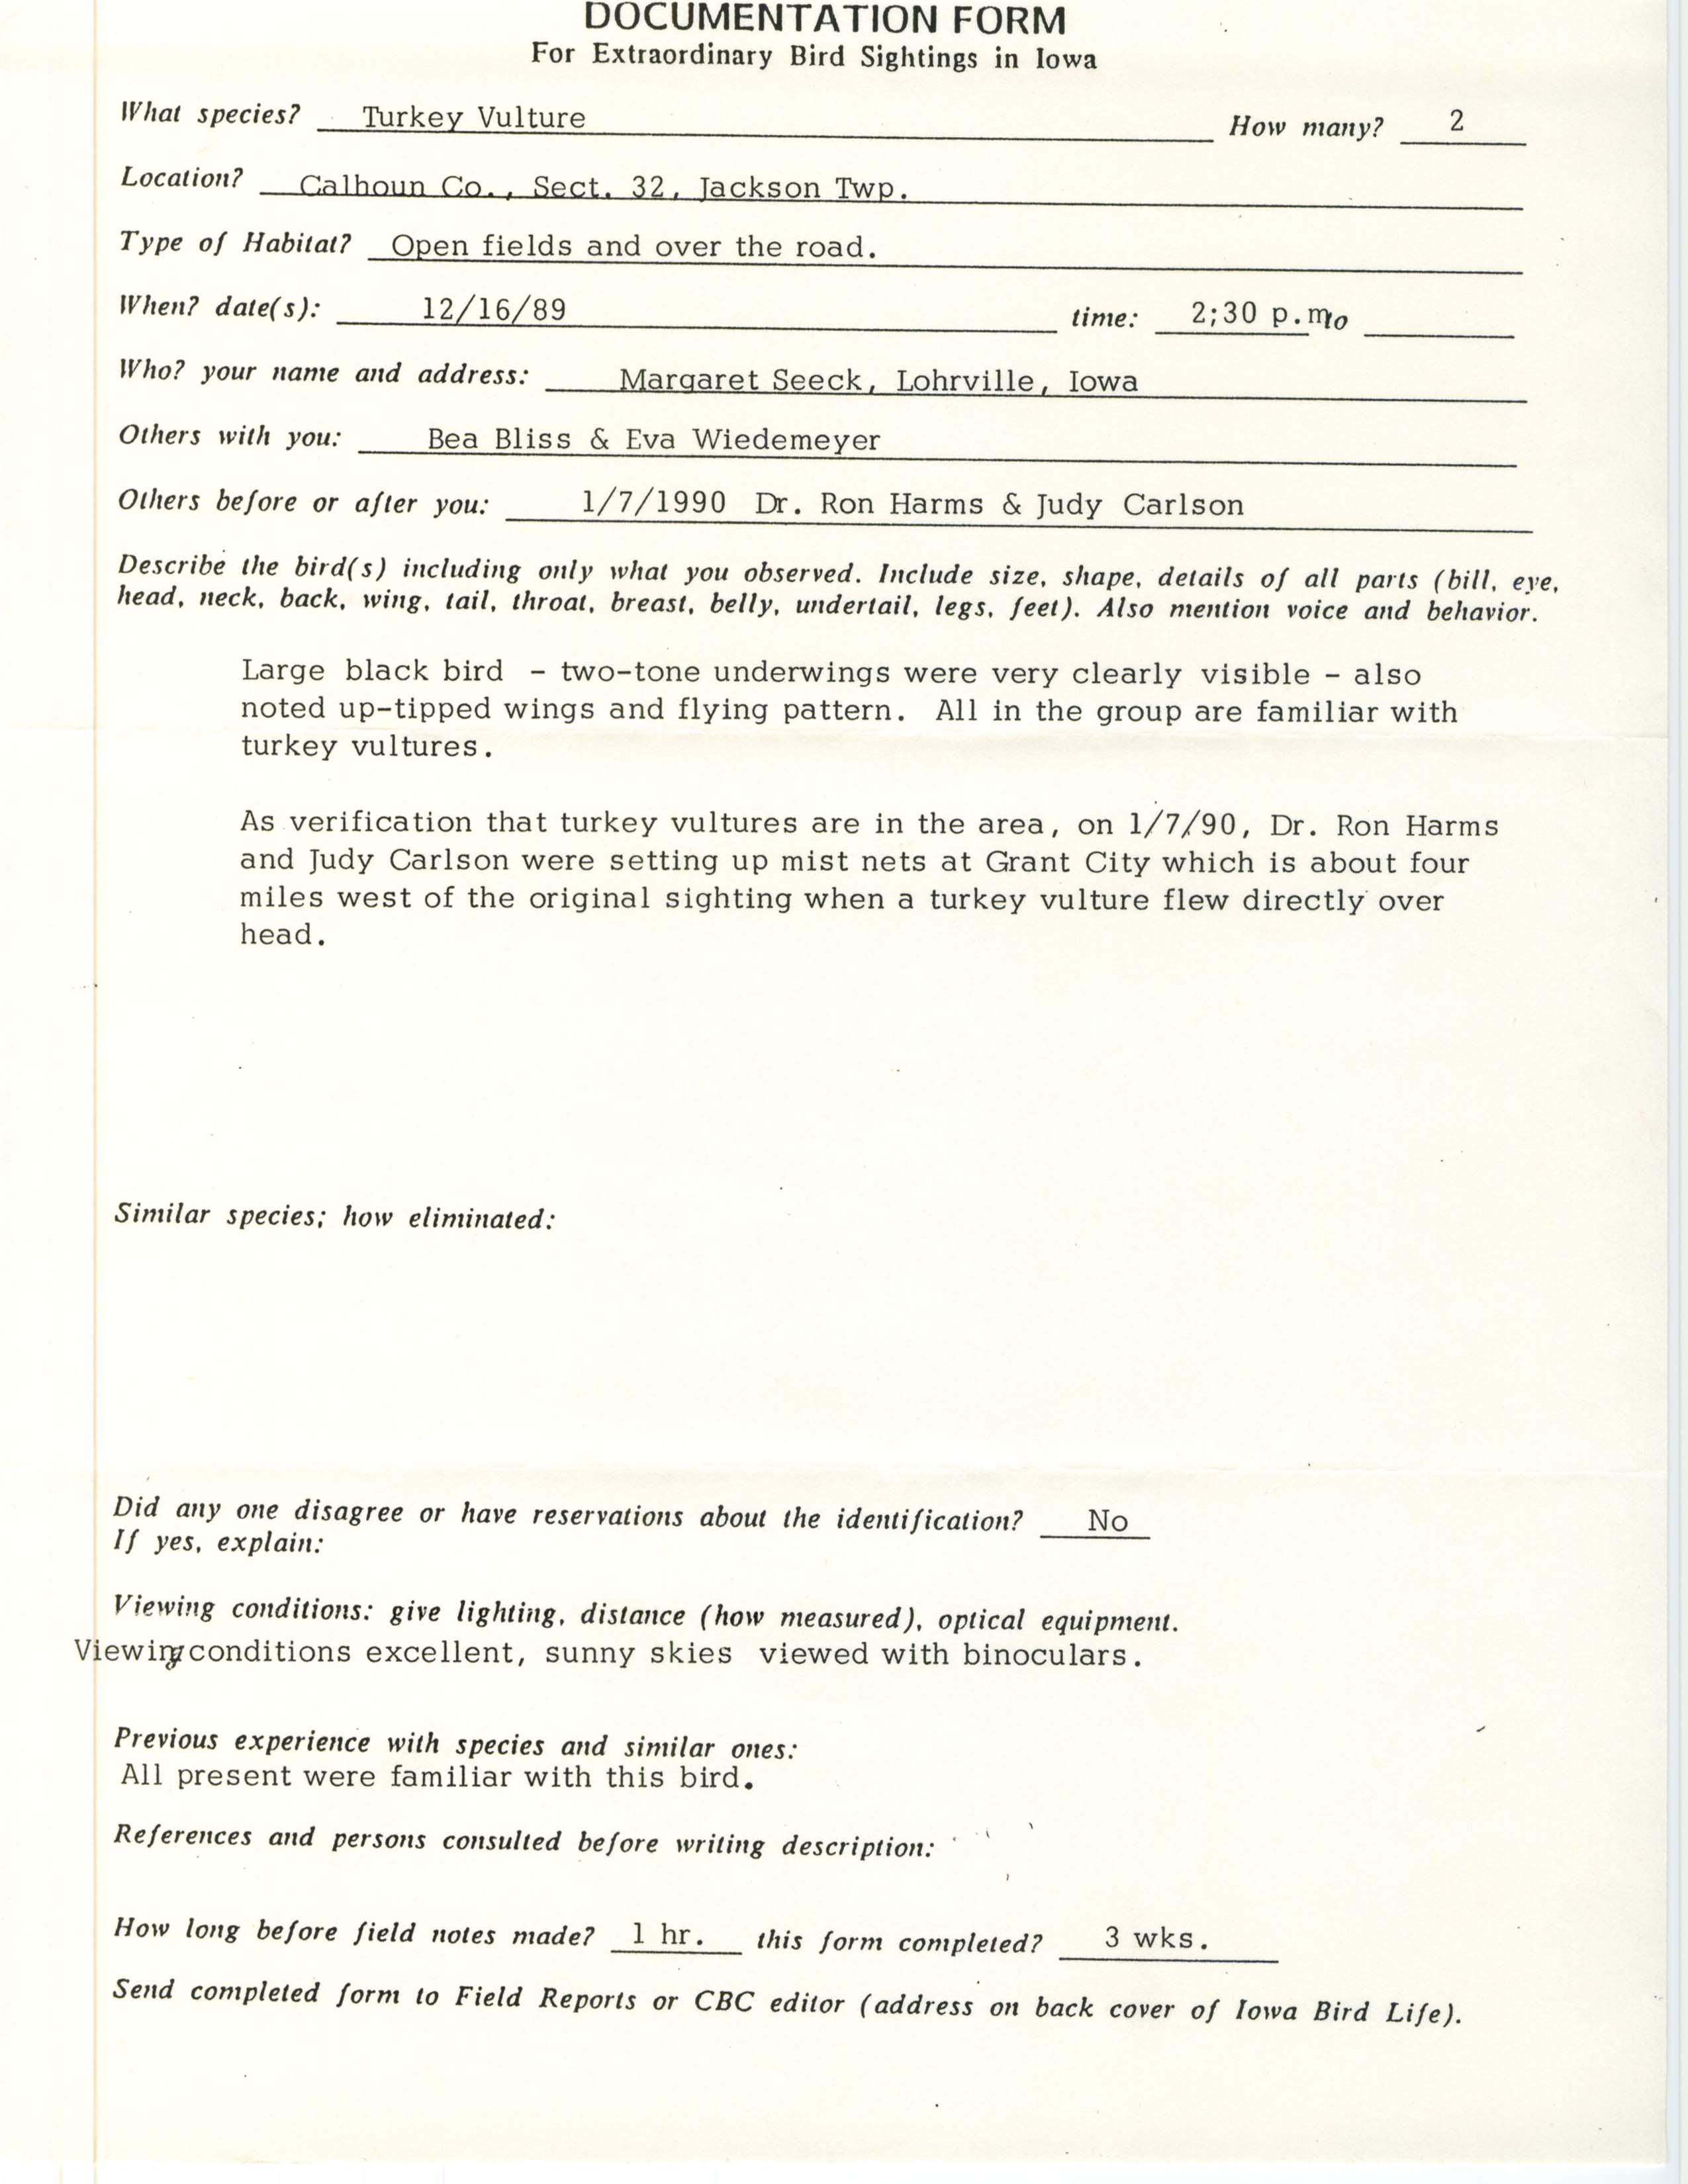 Rare bird documentation form for Turkey Vulture at Jackson Township in Calhoun County, 1989